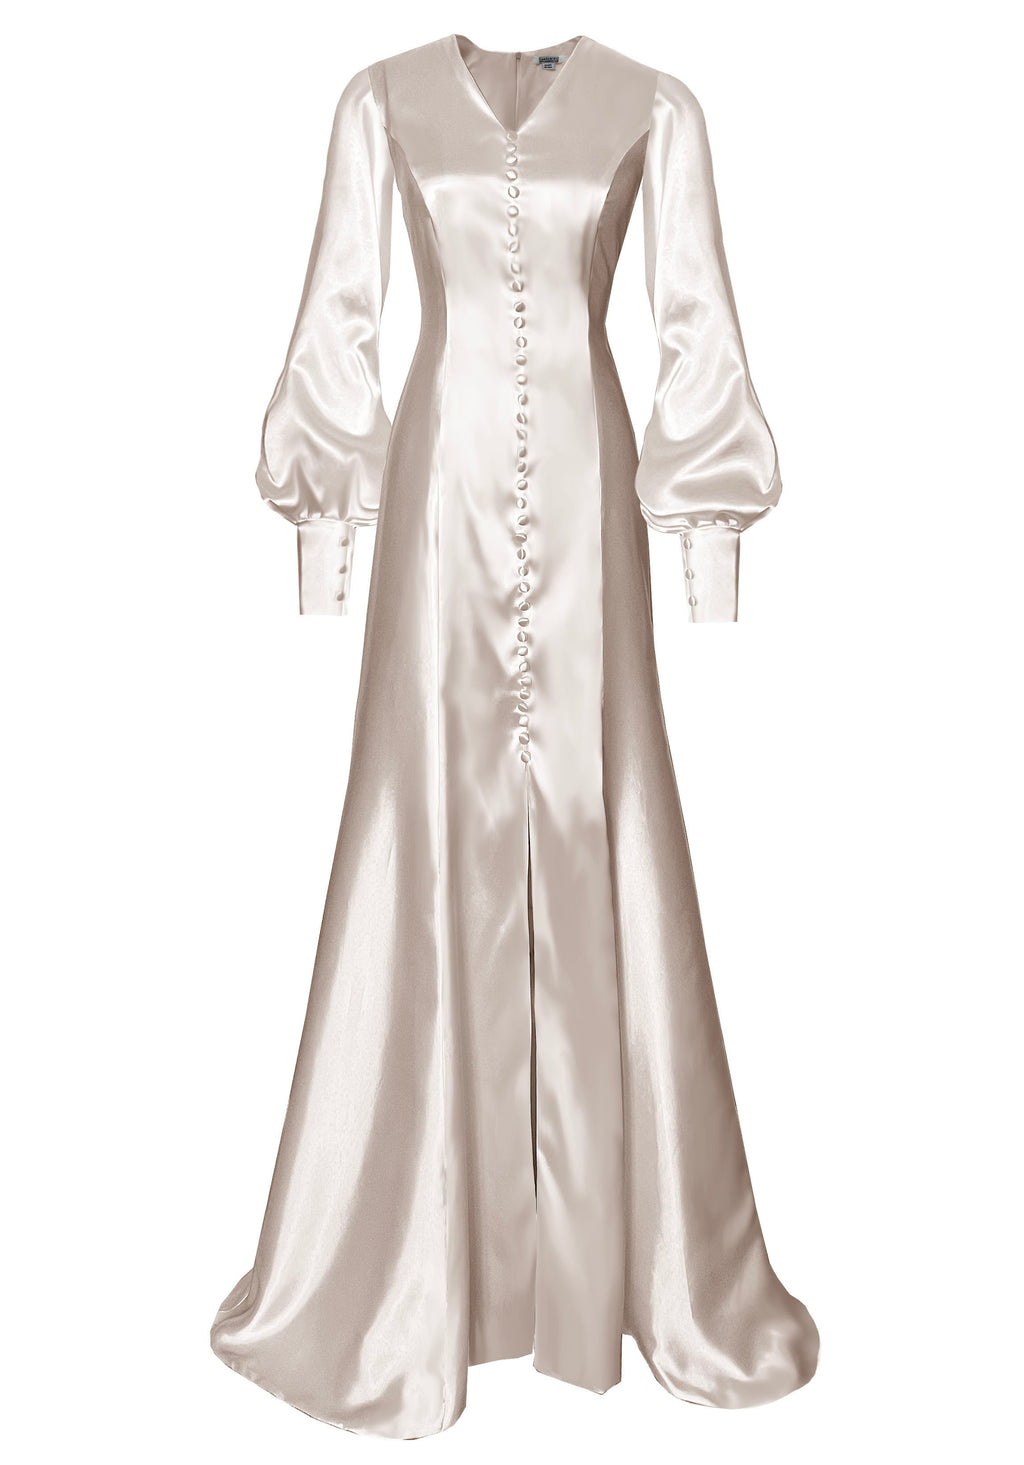  Satin Wedding Gown with Bishop Sleeves